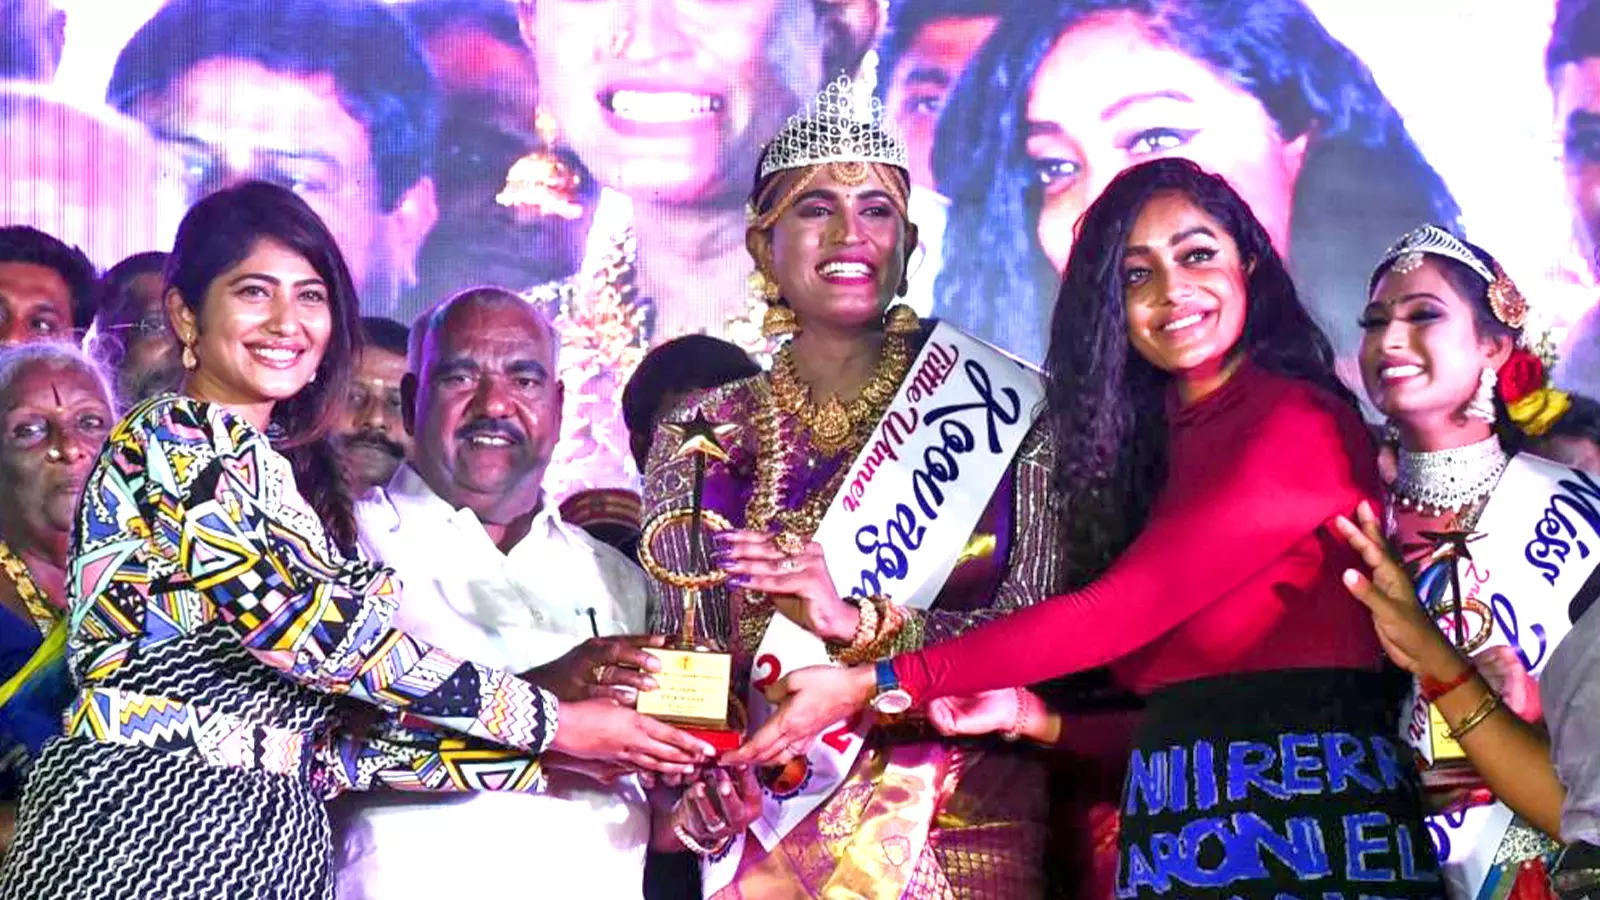 Mehandhi recently won Miss Tamil Nadu Koovagam, a prestigious pageant title among trans individuals in Tamil Nadu.